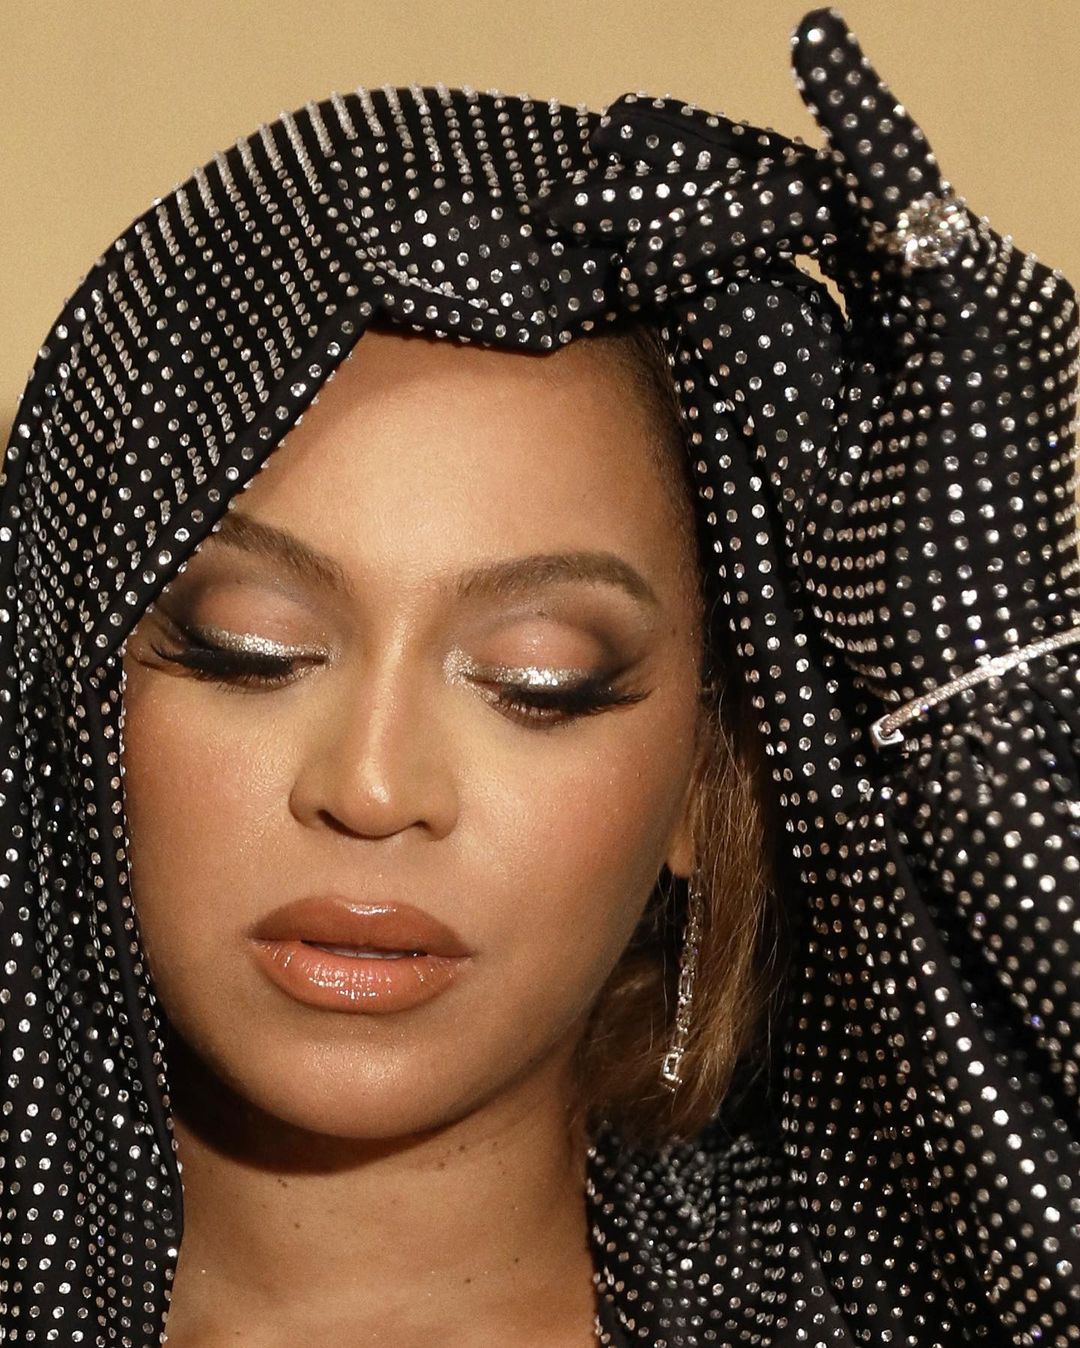 Звезды 90-х обвинили Beyonce в краже музыки